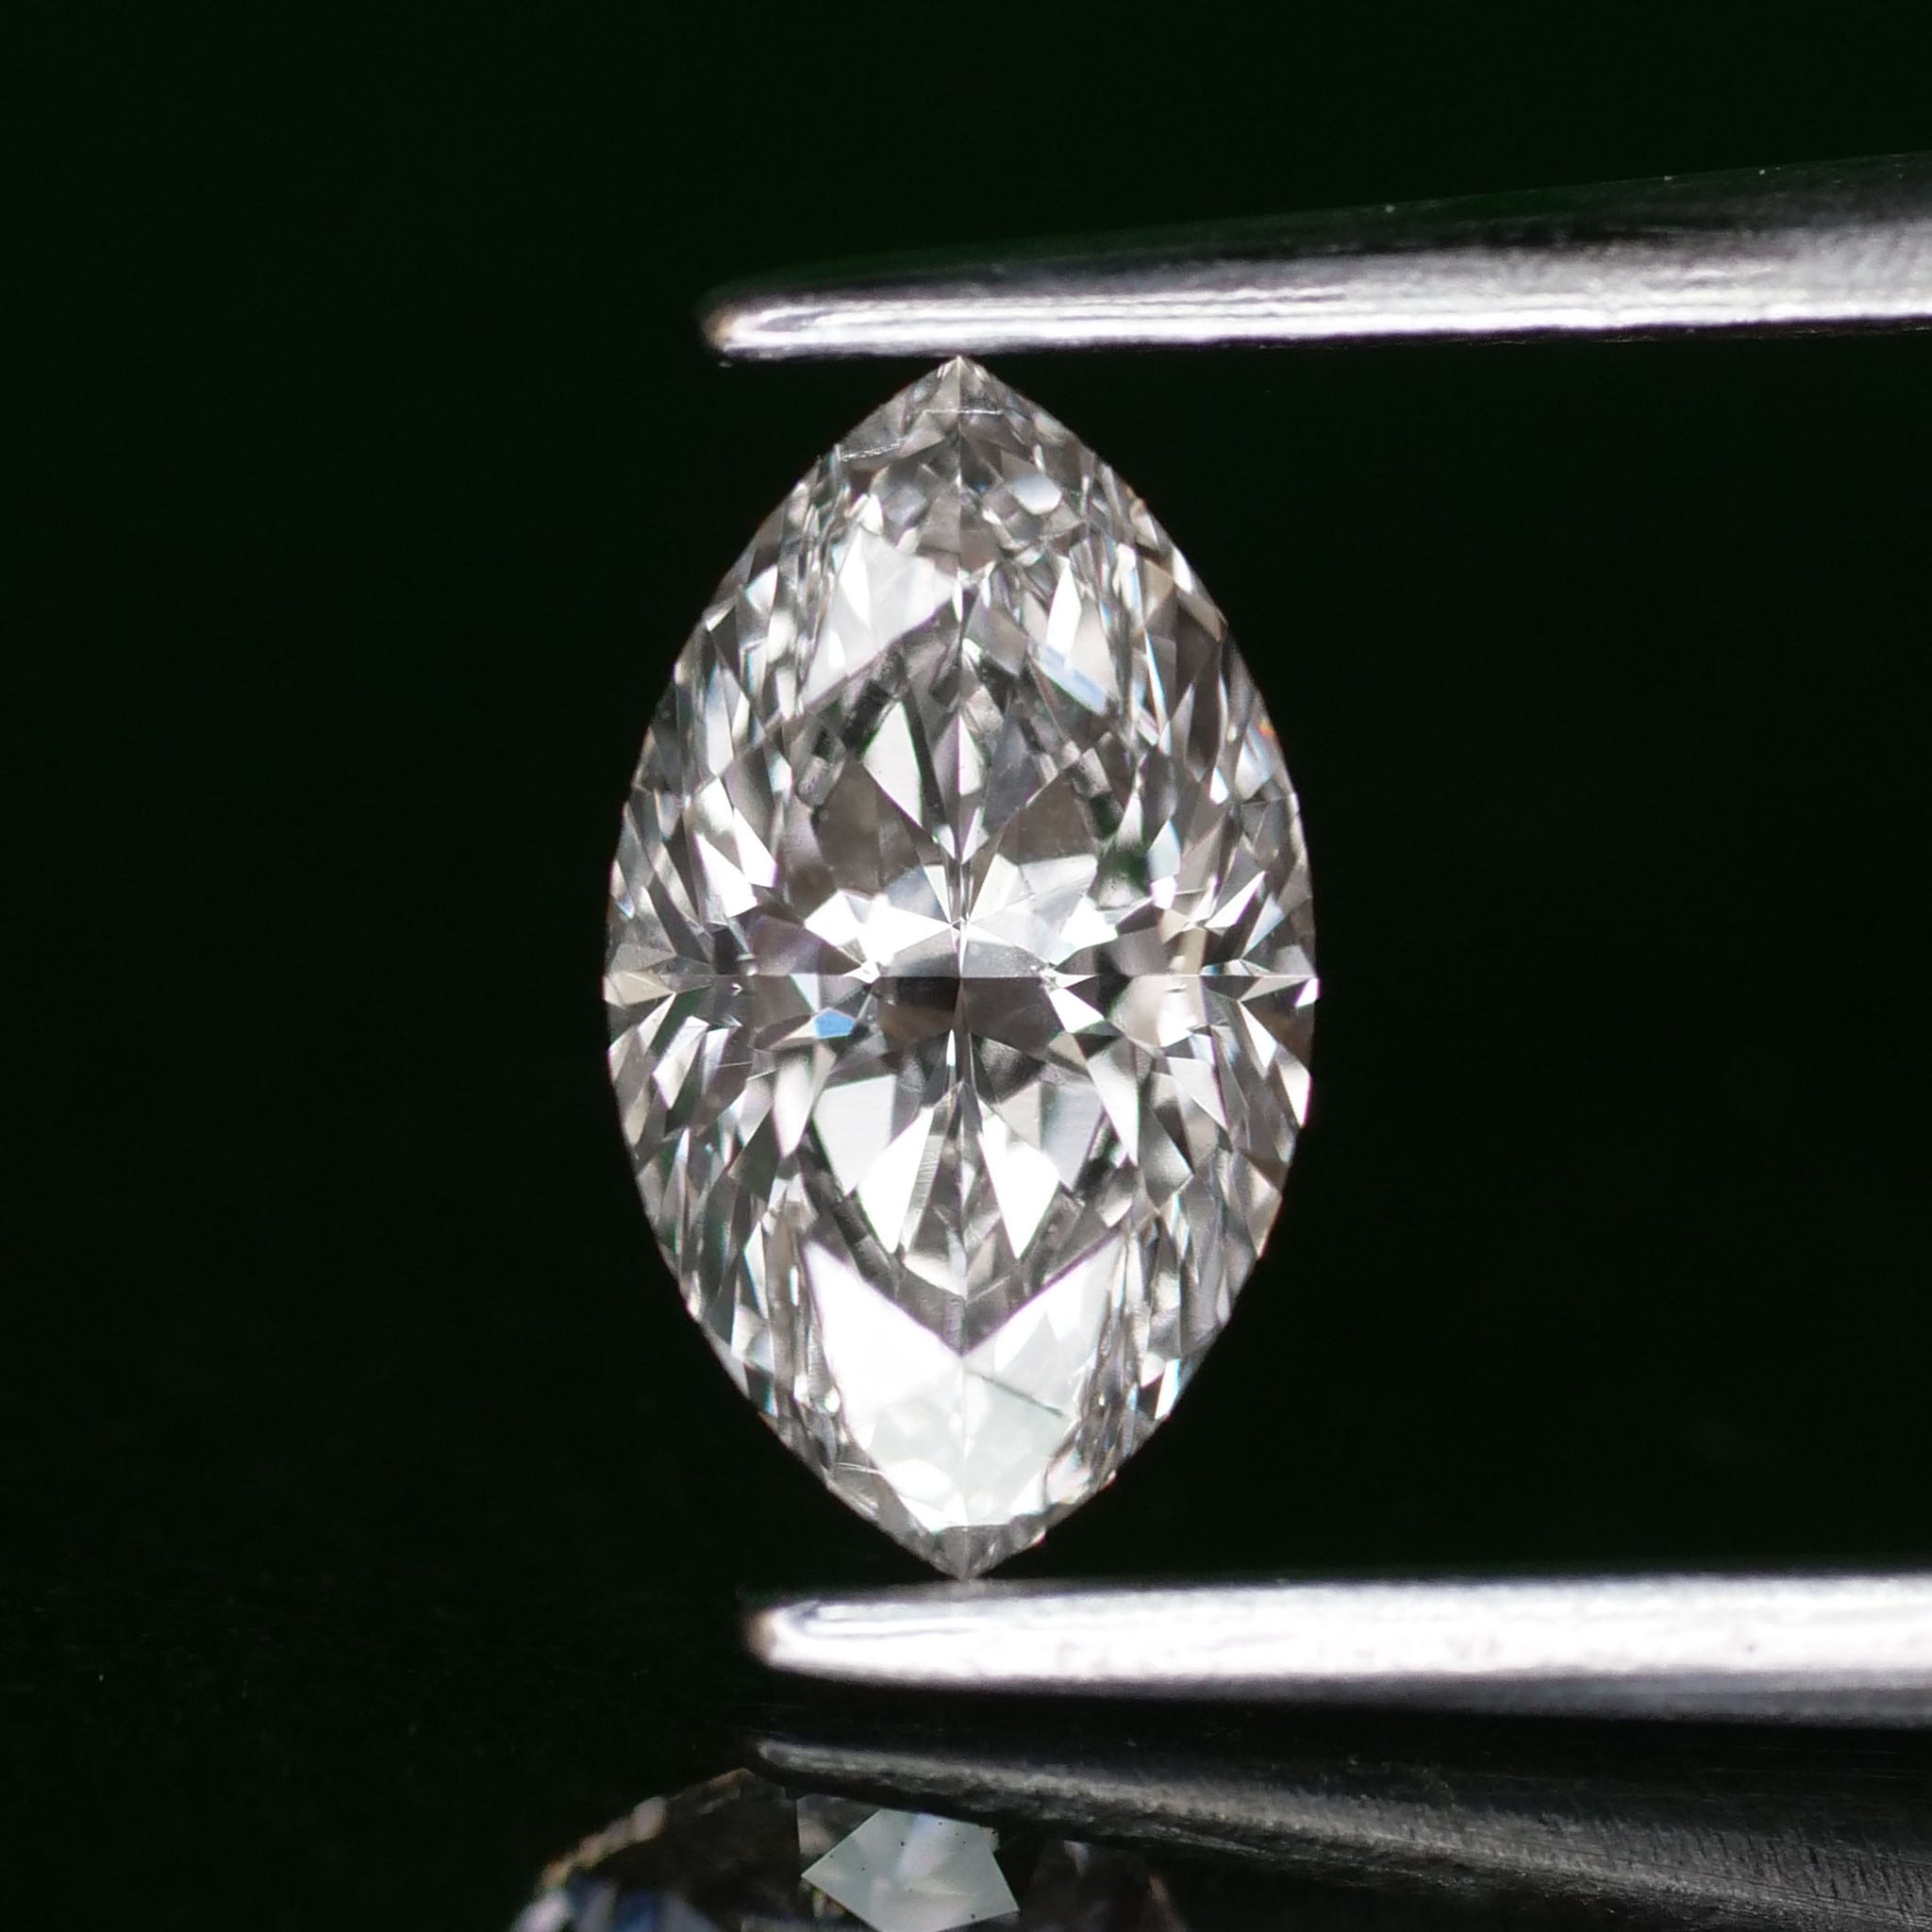 Lab grown diamond | IGI certificate, marquise cut 8.5x5mm*, G color, VVS 2, 0.76 ct - Eden Garden Jewelry™